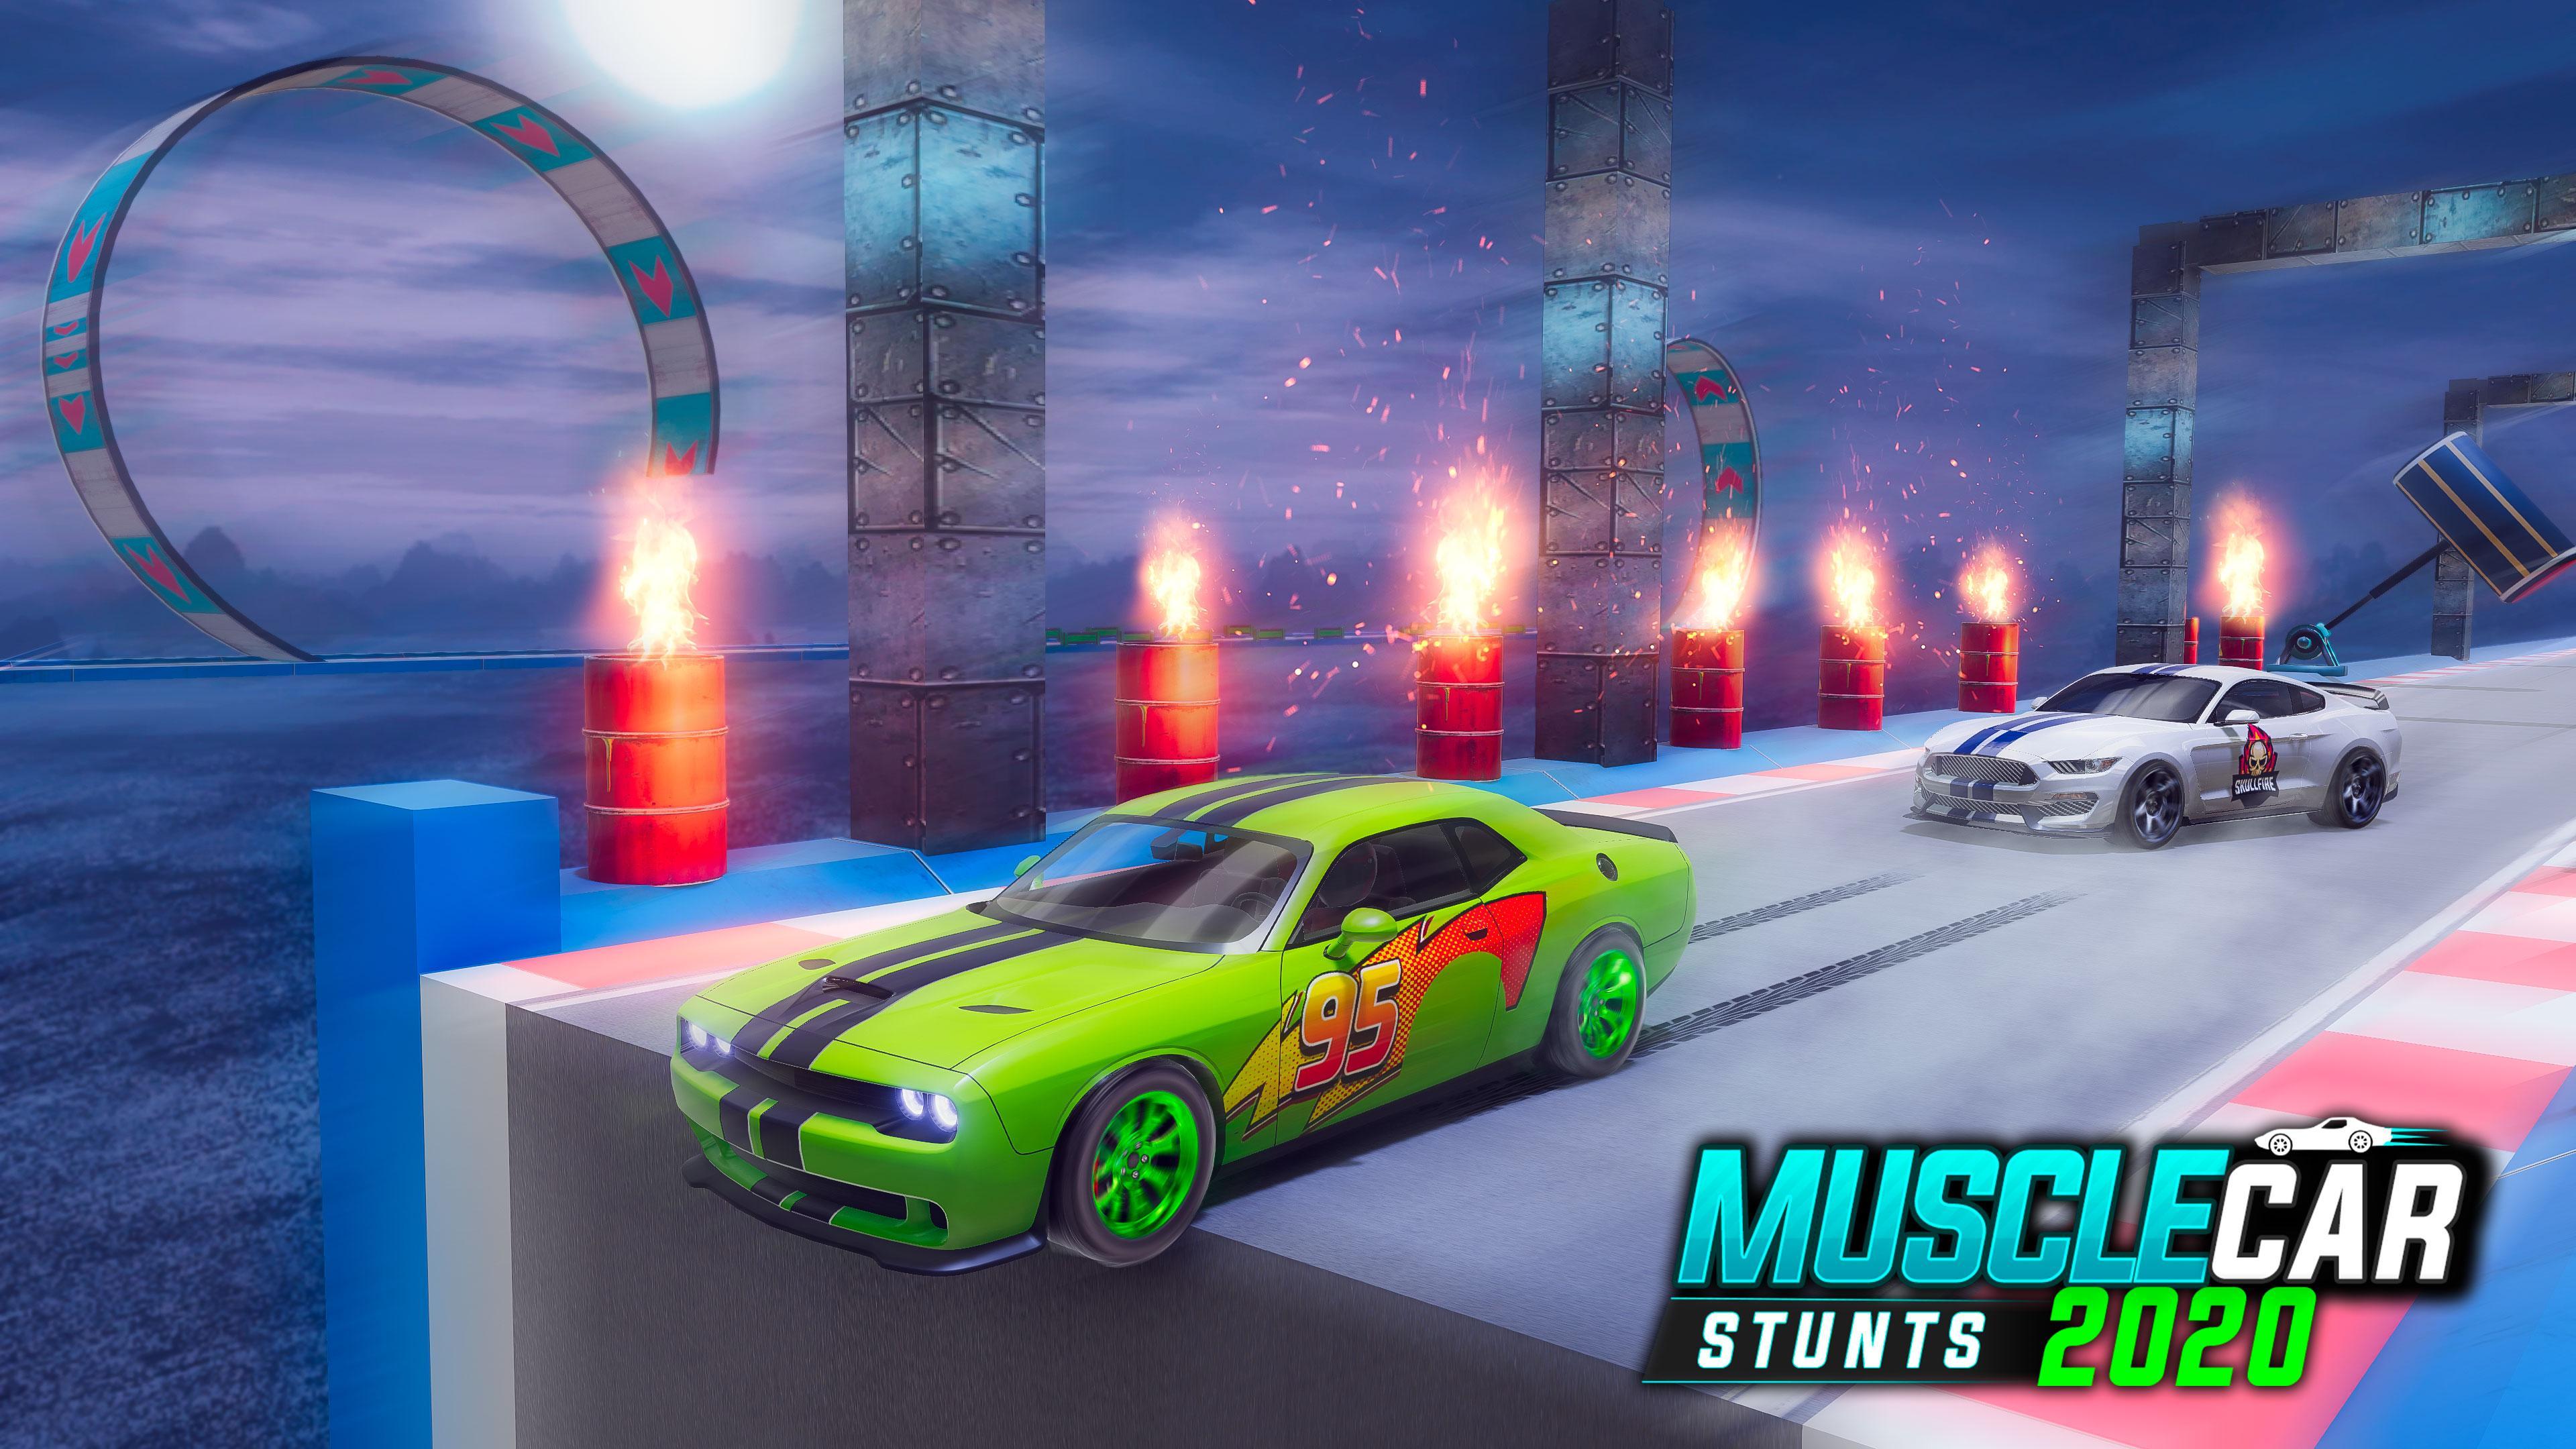 Muscle Car Stunts 2020 Mega Ramp Stunt Car Games 1.0.9 Screenshot 21